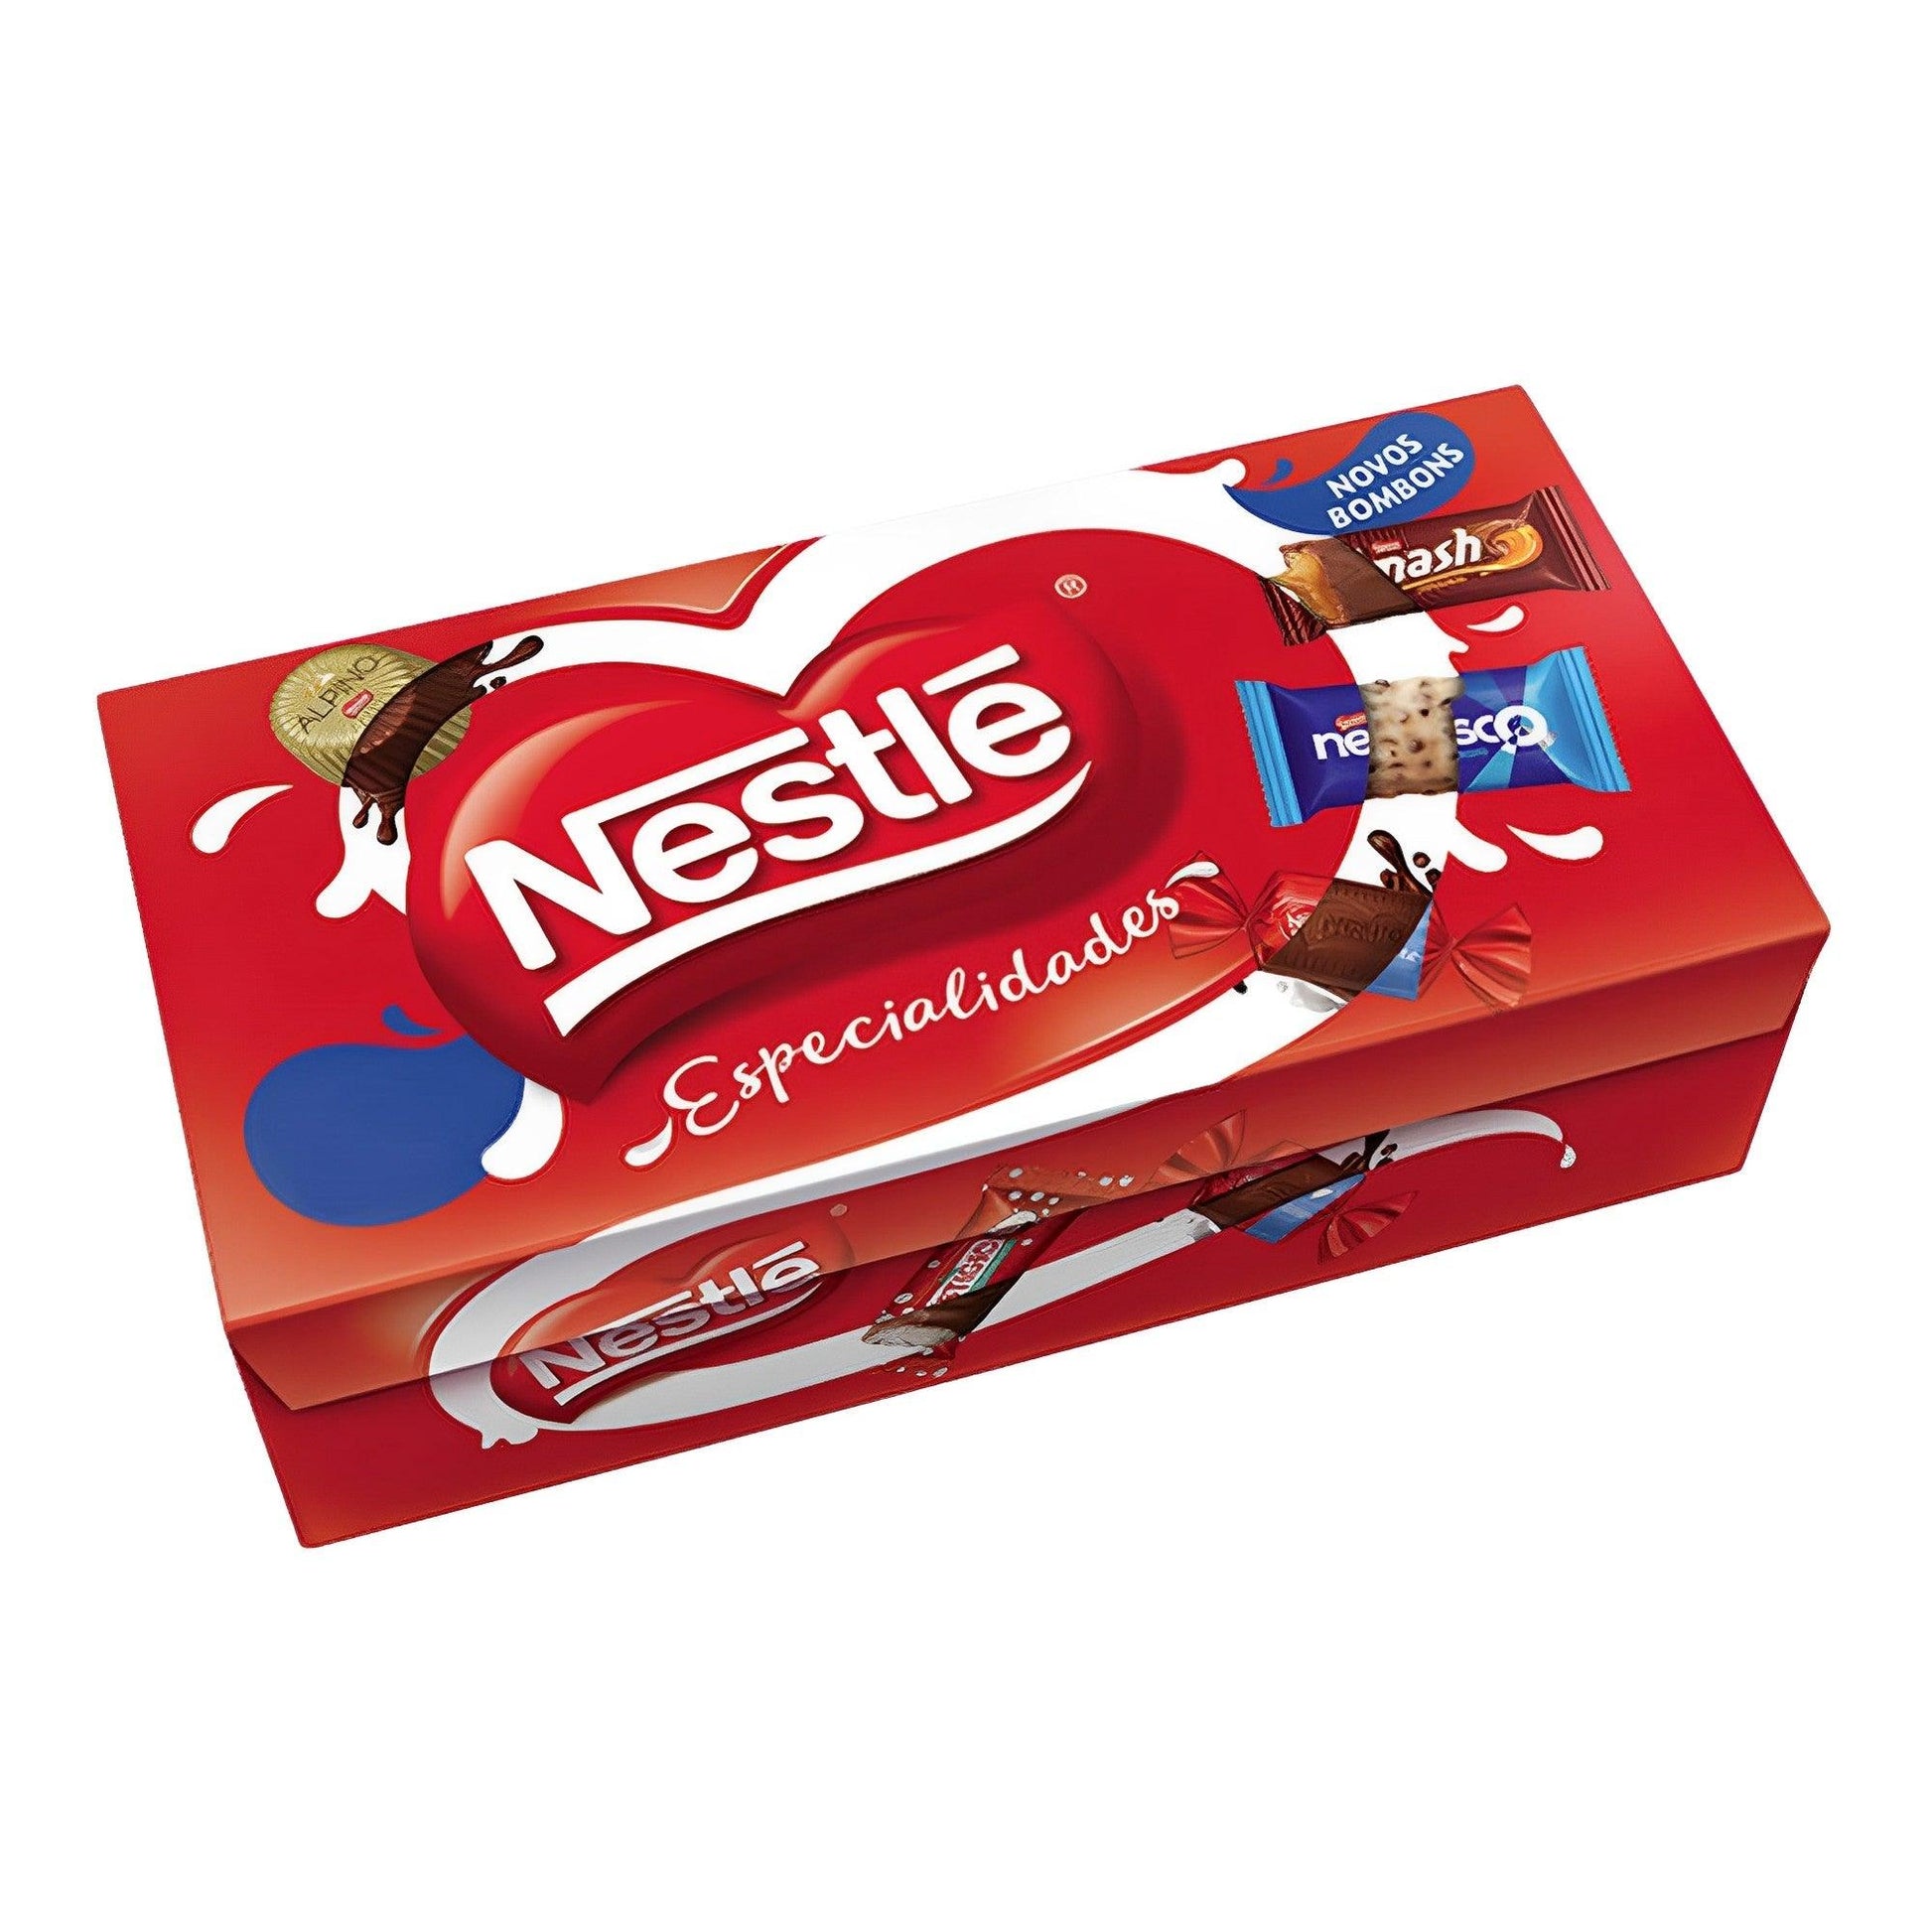 Nestlé Specialties Assorted Bonbon Box 8.85 oz. (Pack of 3) - Brazilian Shop